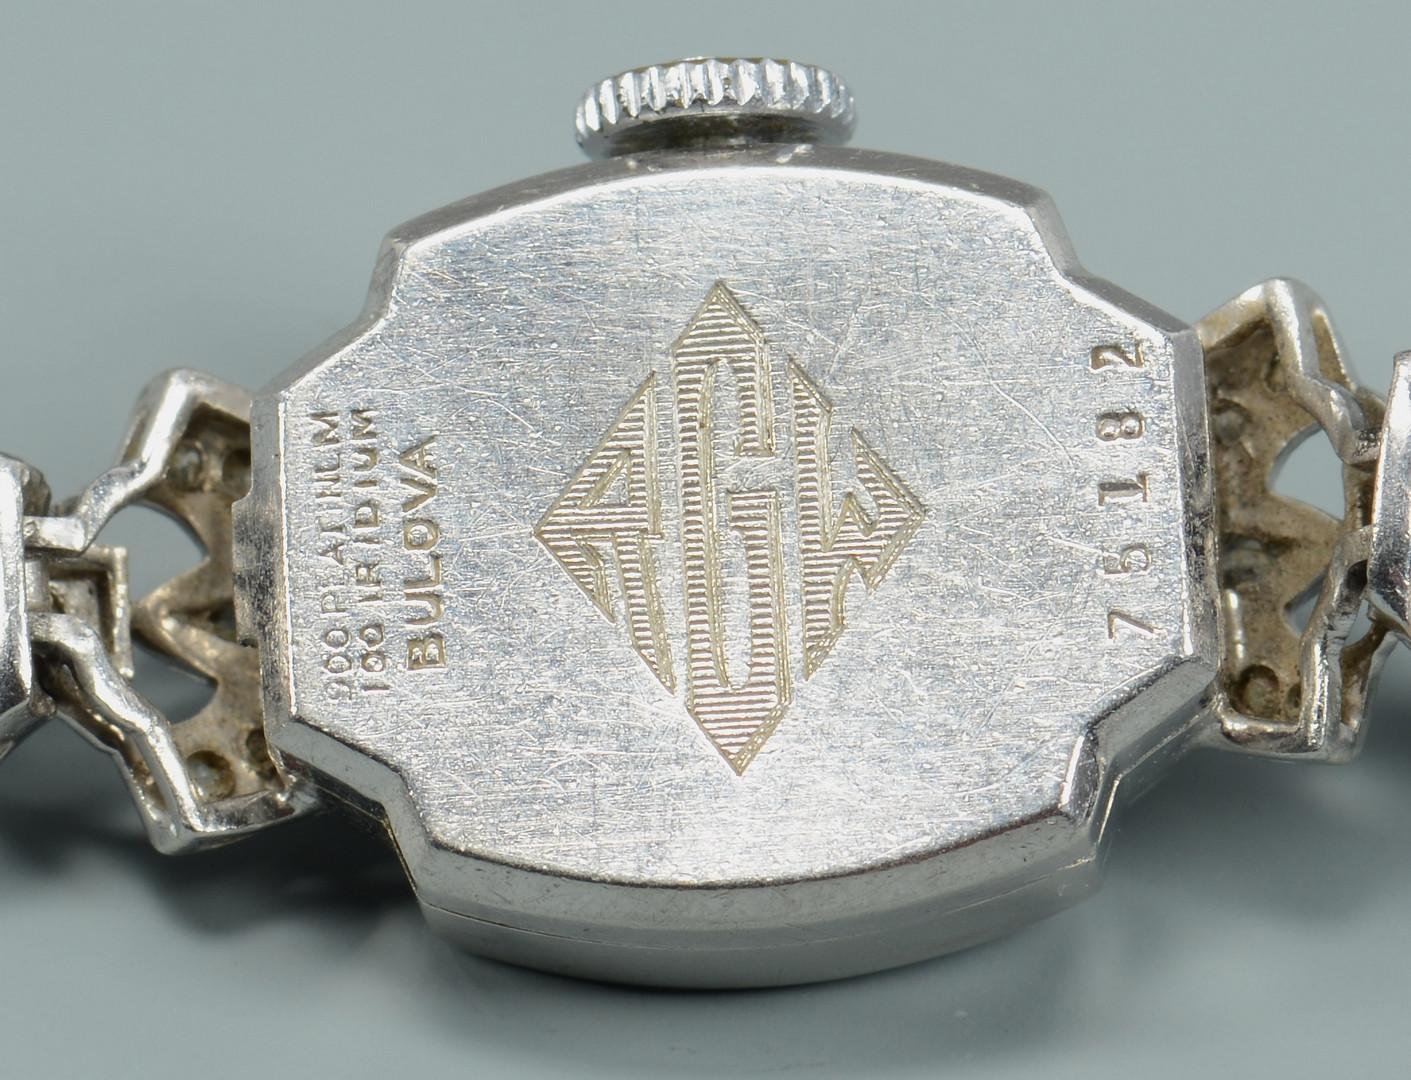 Lot 585: Bulova Diamond/Platinum Watch